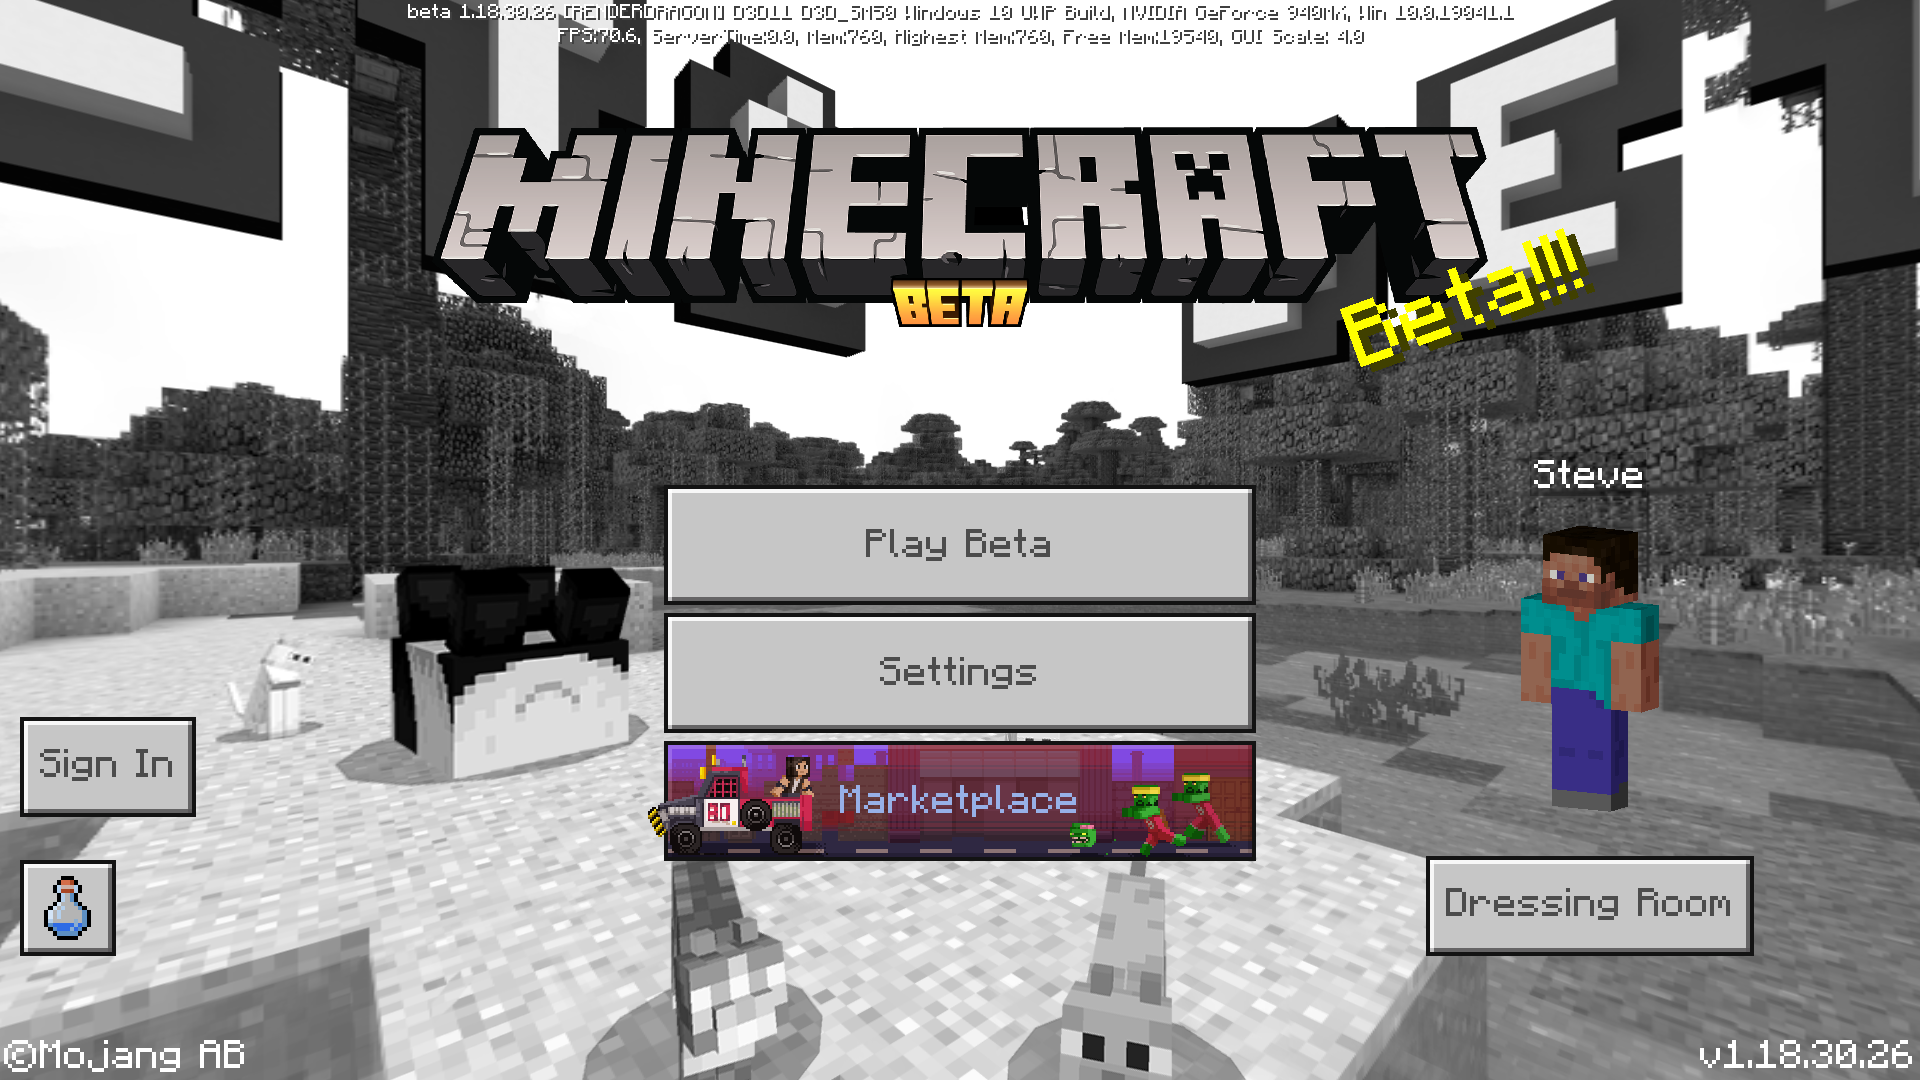 Download Minecraft PE 1.16.0.66 apk free: Nether Update